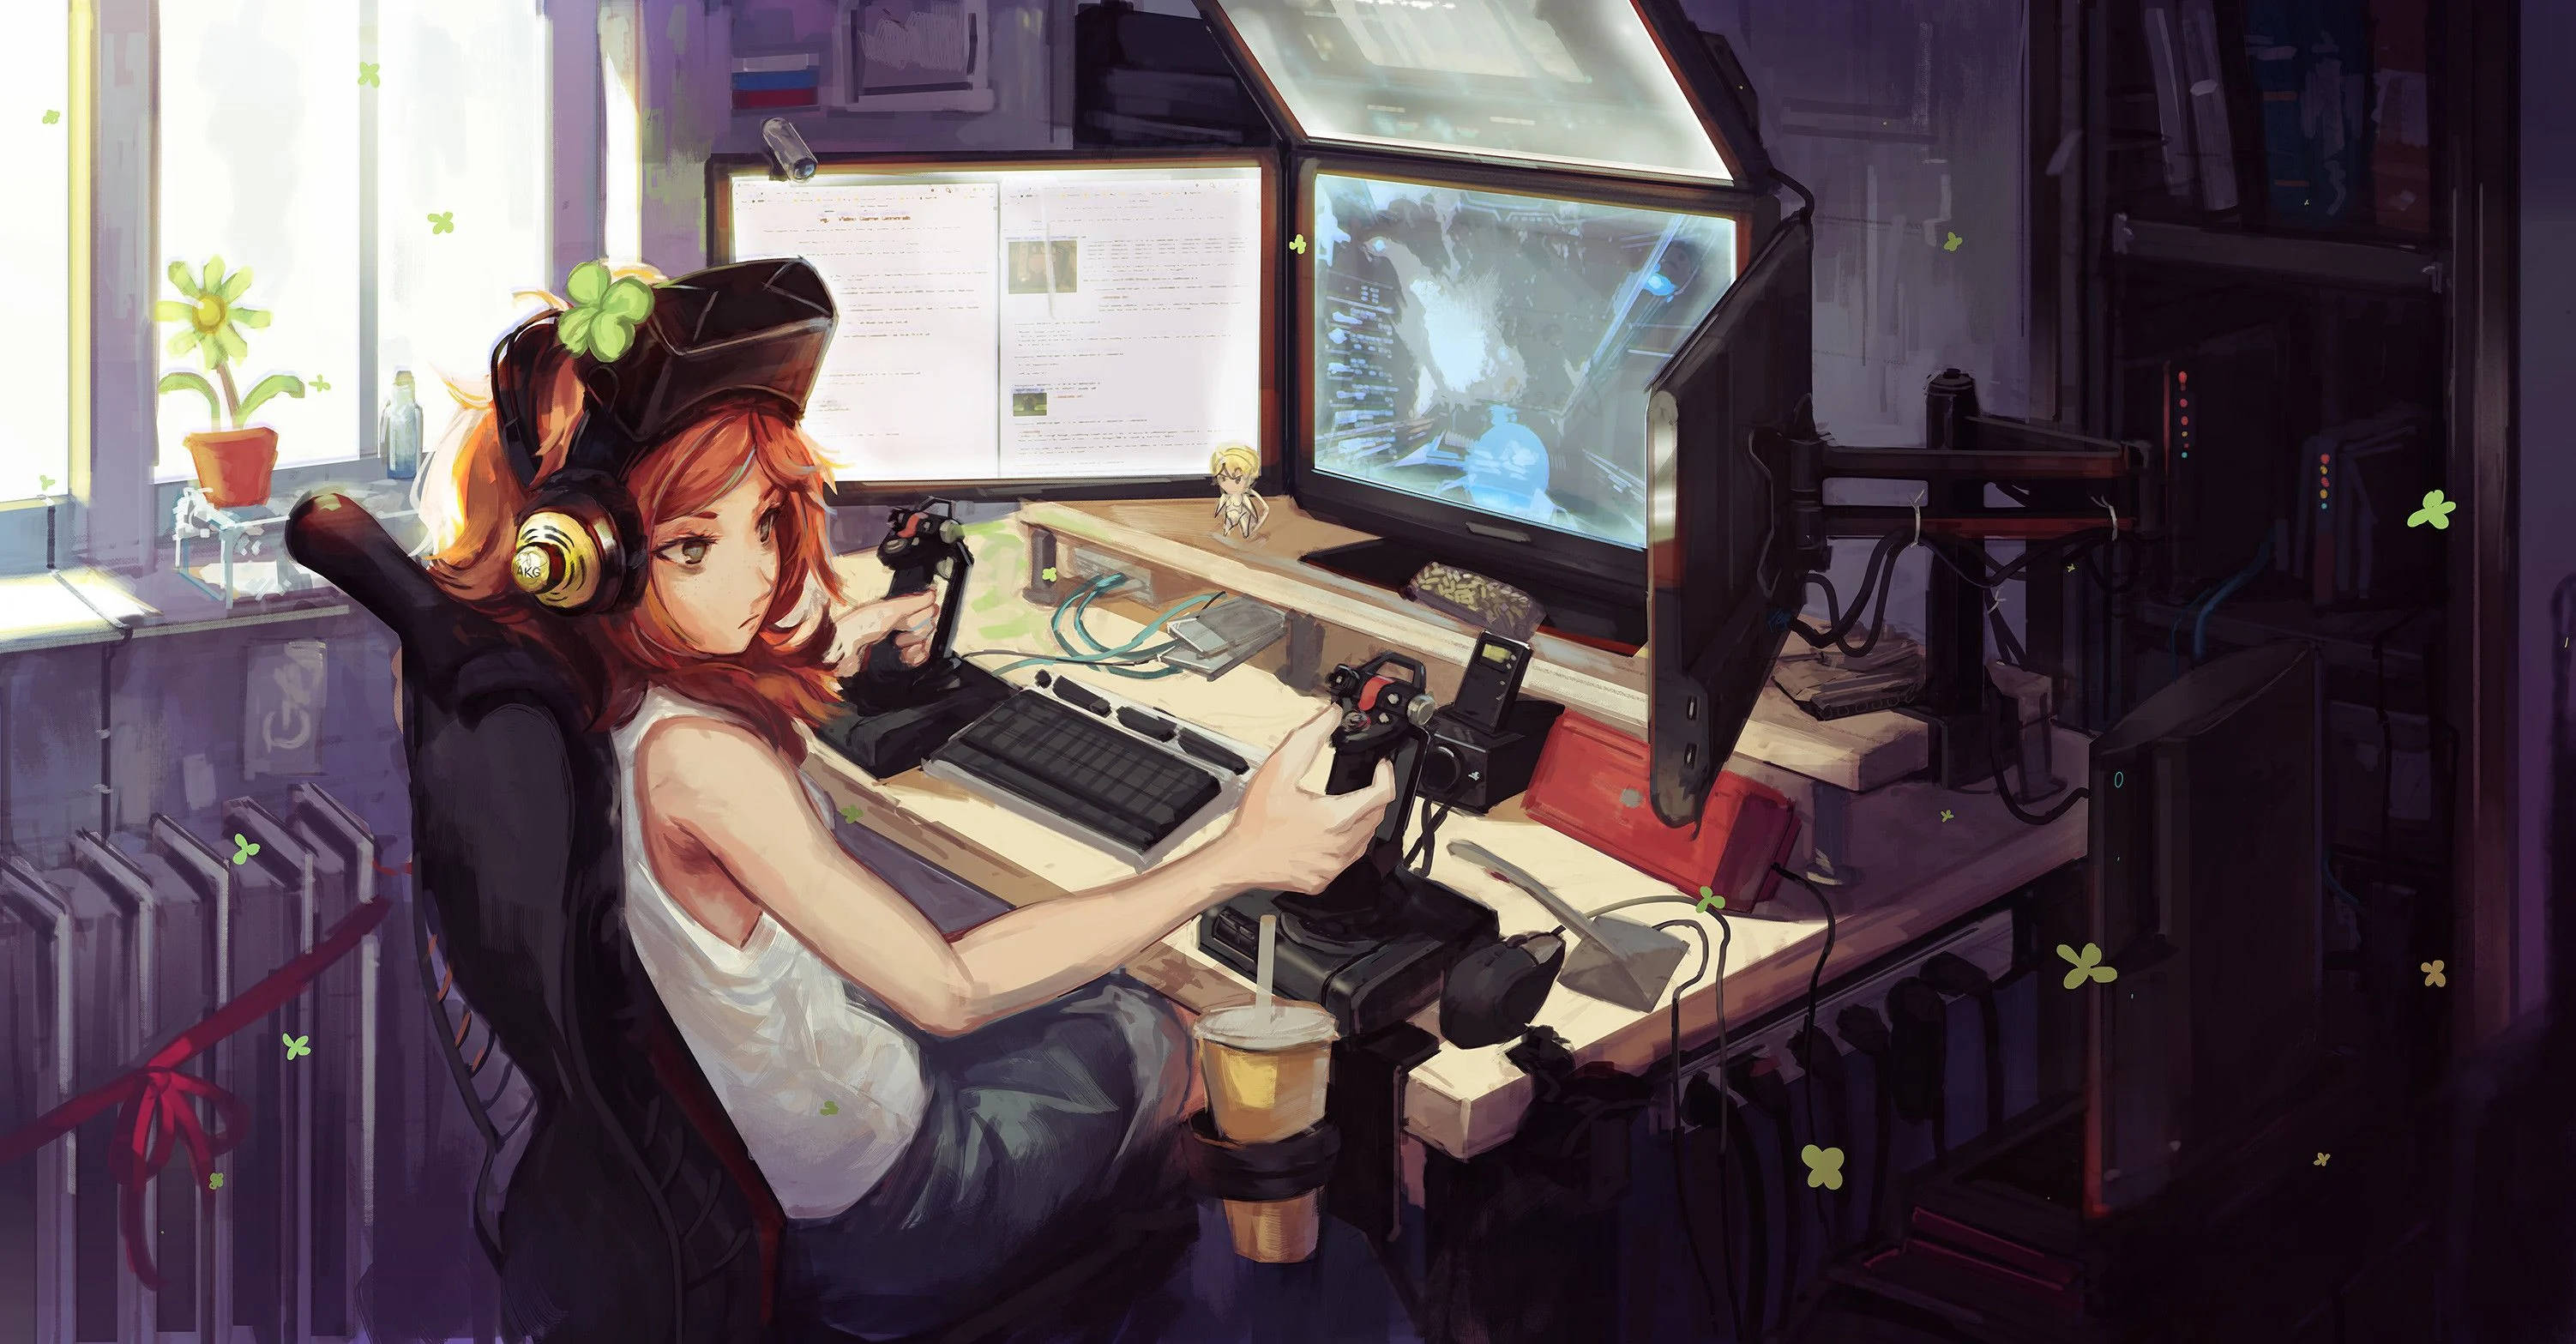 Download Gaming Room Anime Gamer Girl Wallpaper 